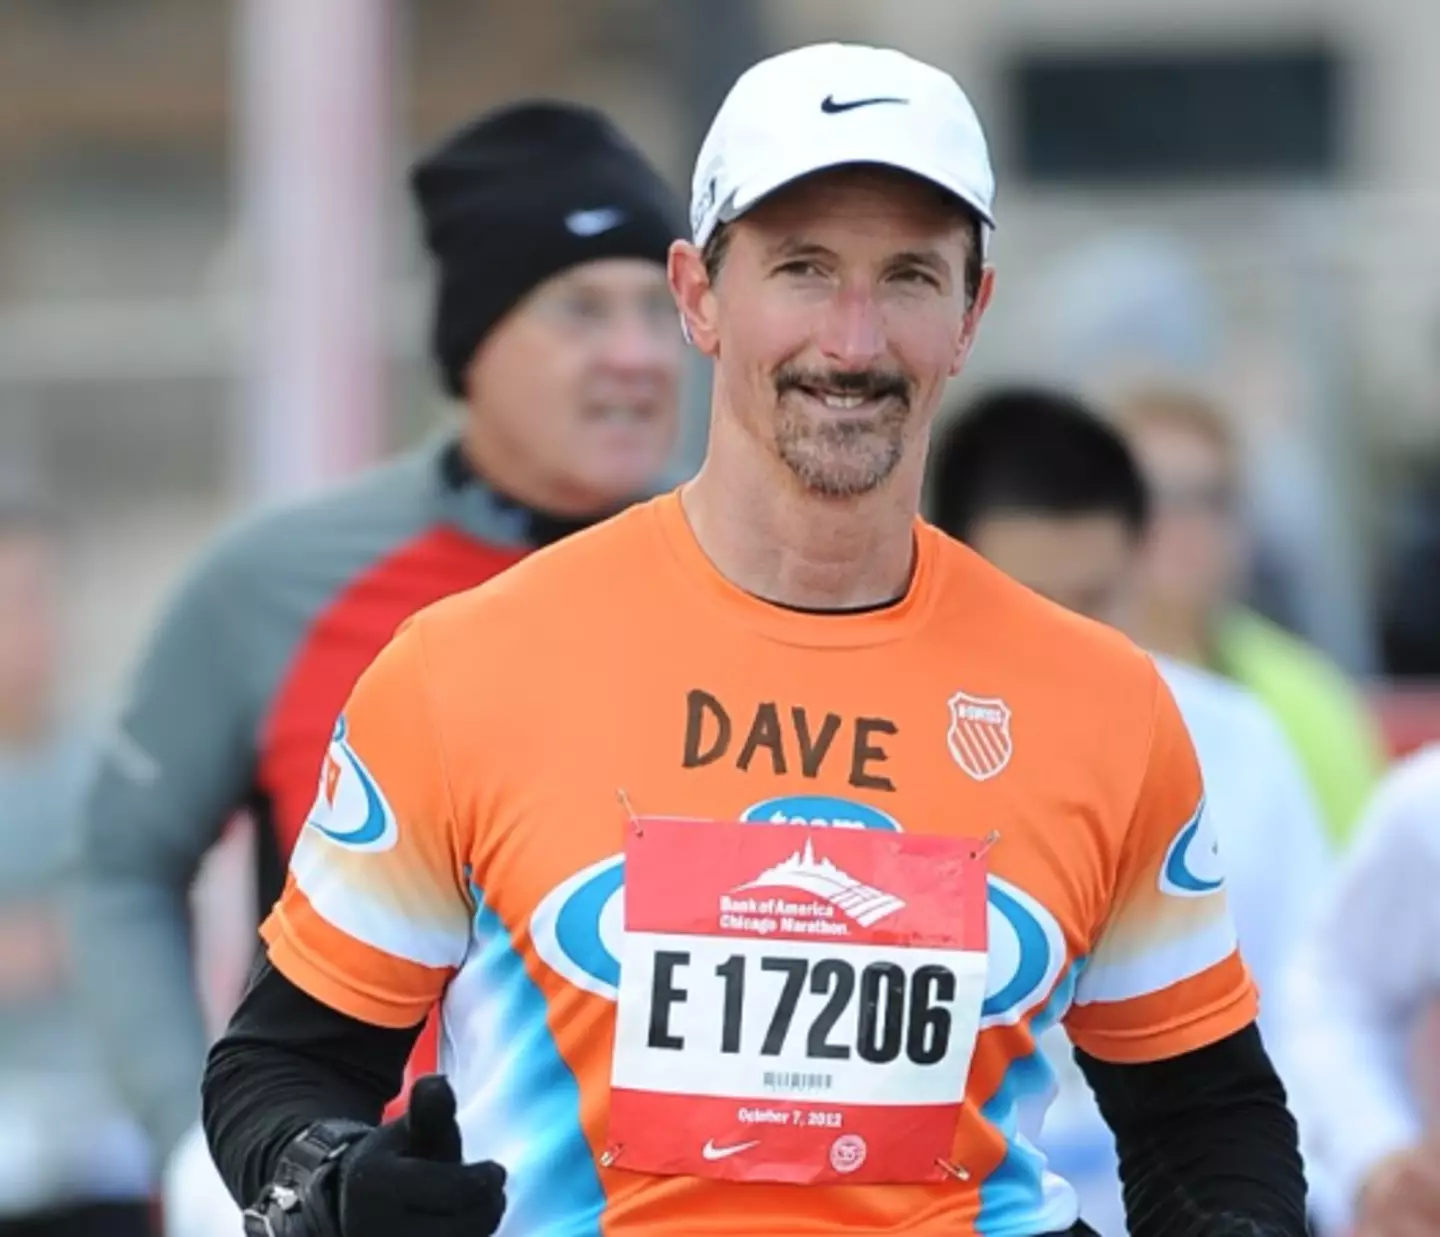 Dave Pascoe donates is a keen marathon runner.